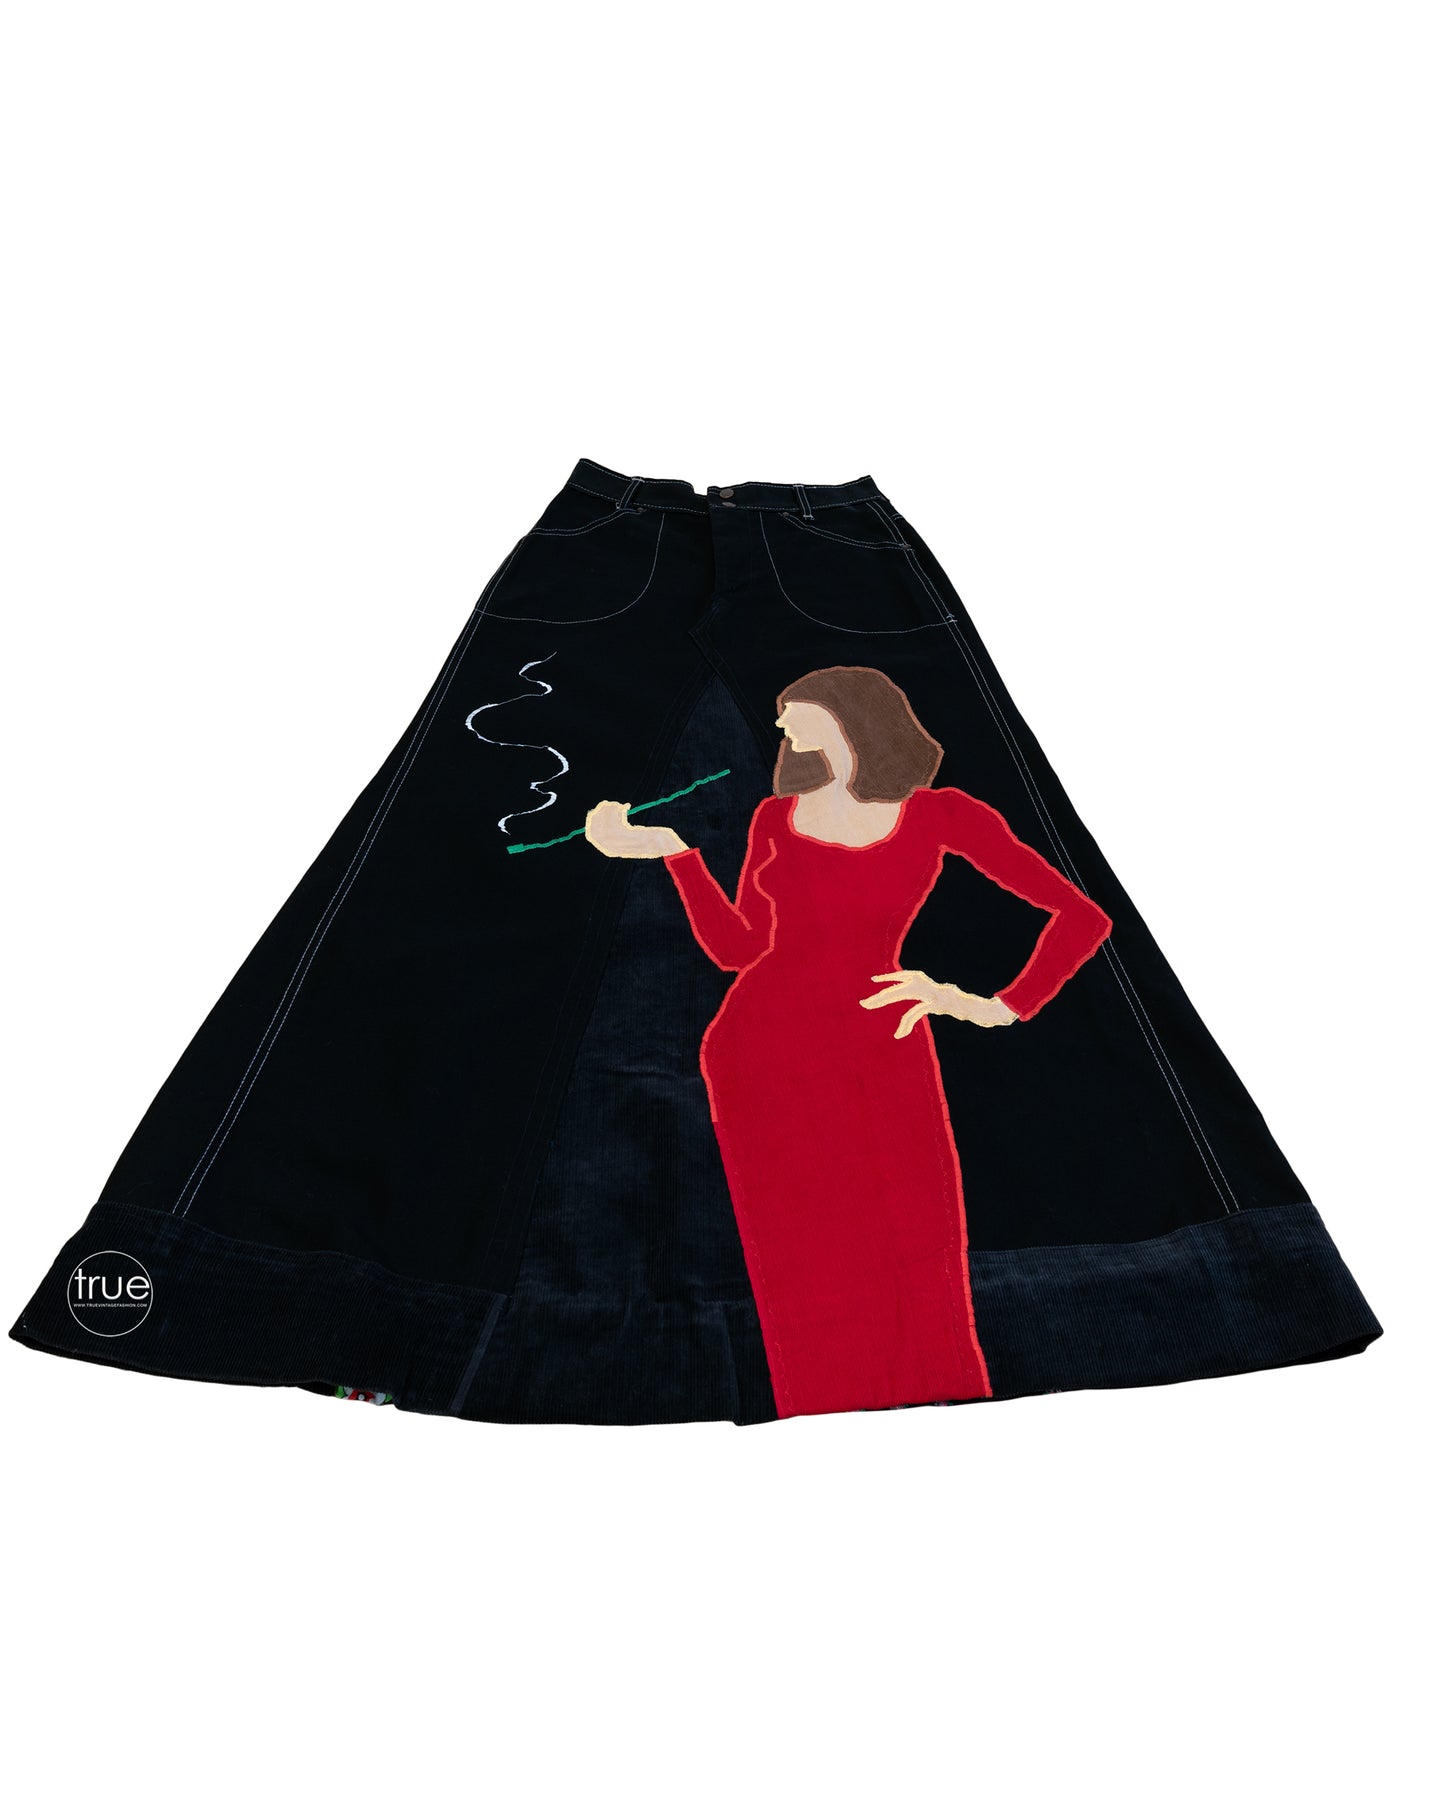 vintage 1970's denim skirt ...rare black denim LANDLUBBER smoking lady appliqué patchwork maxi skirt